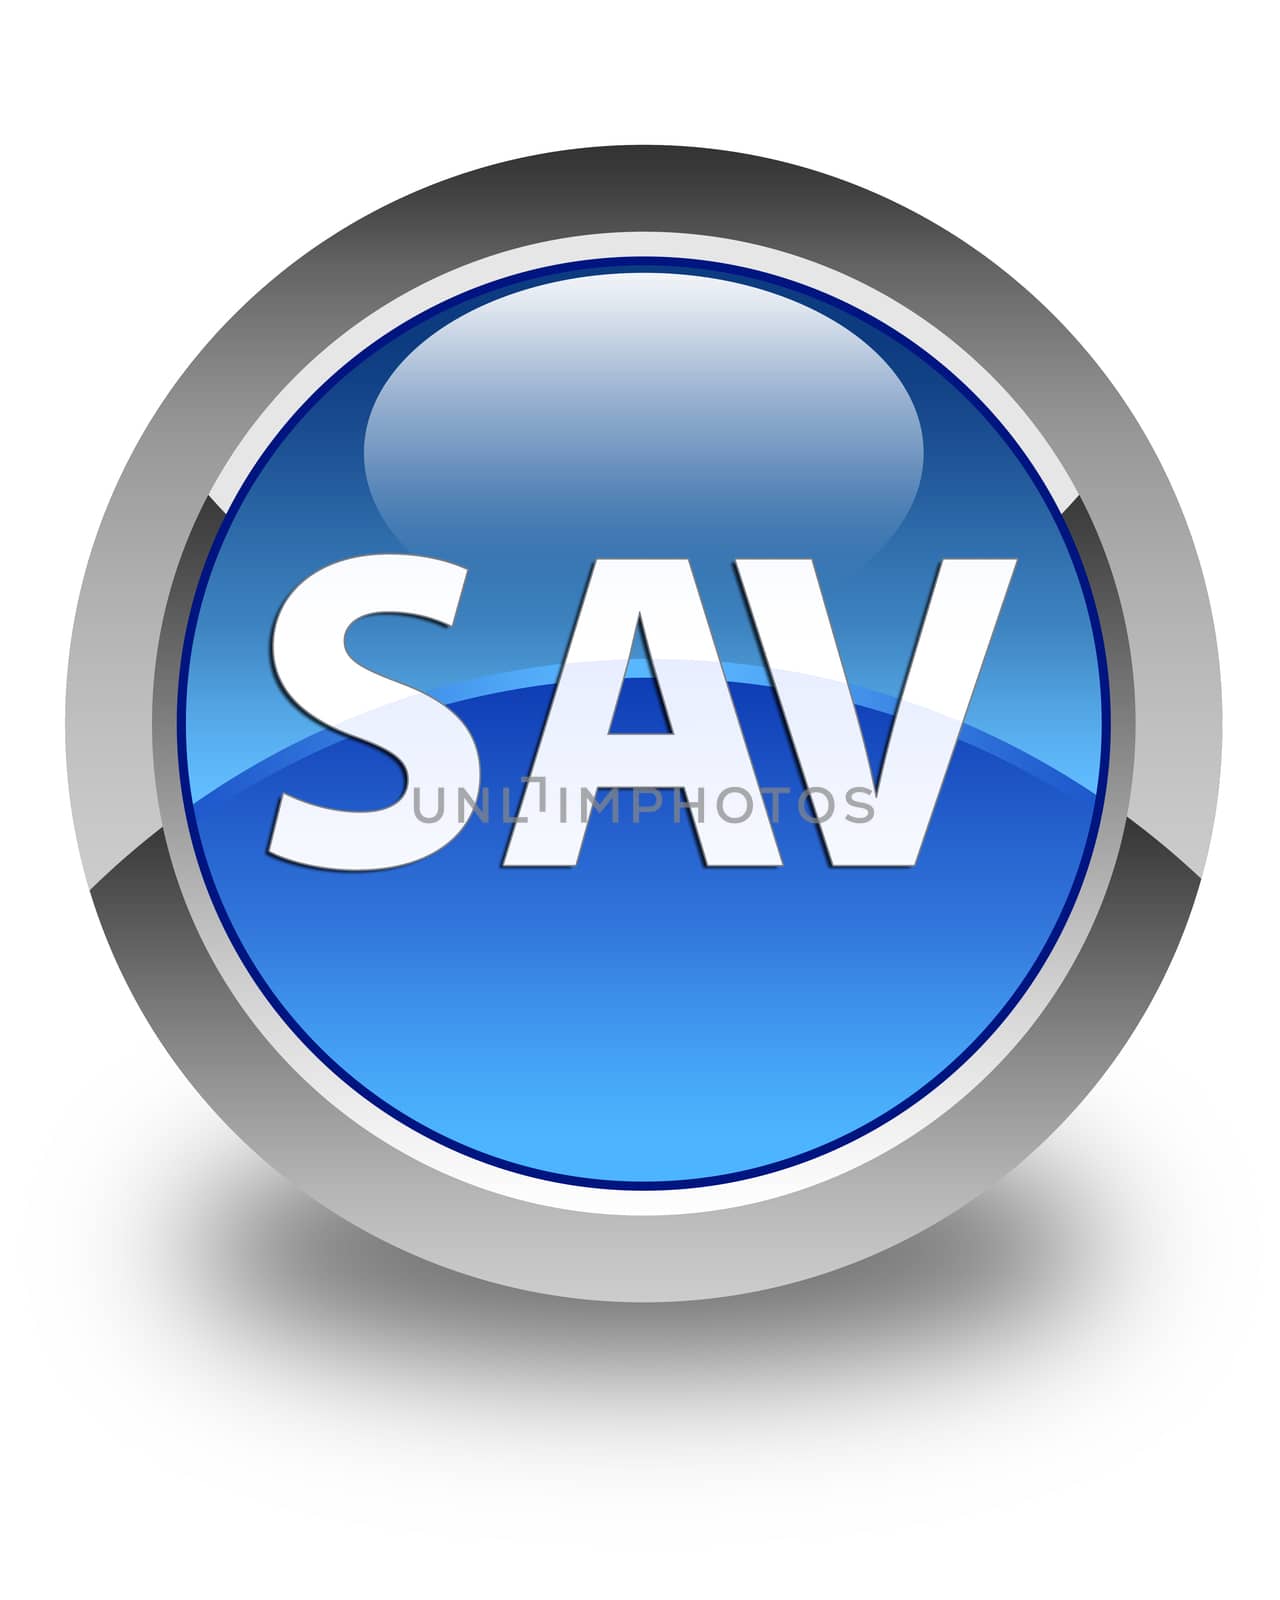 SAV glossy blue round button